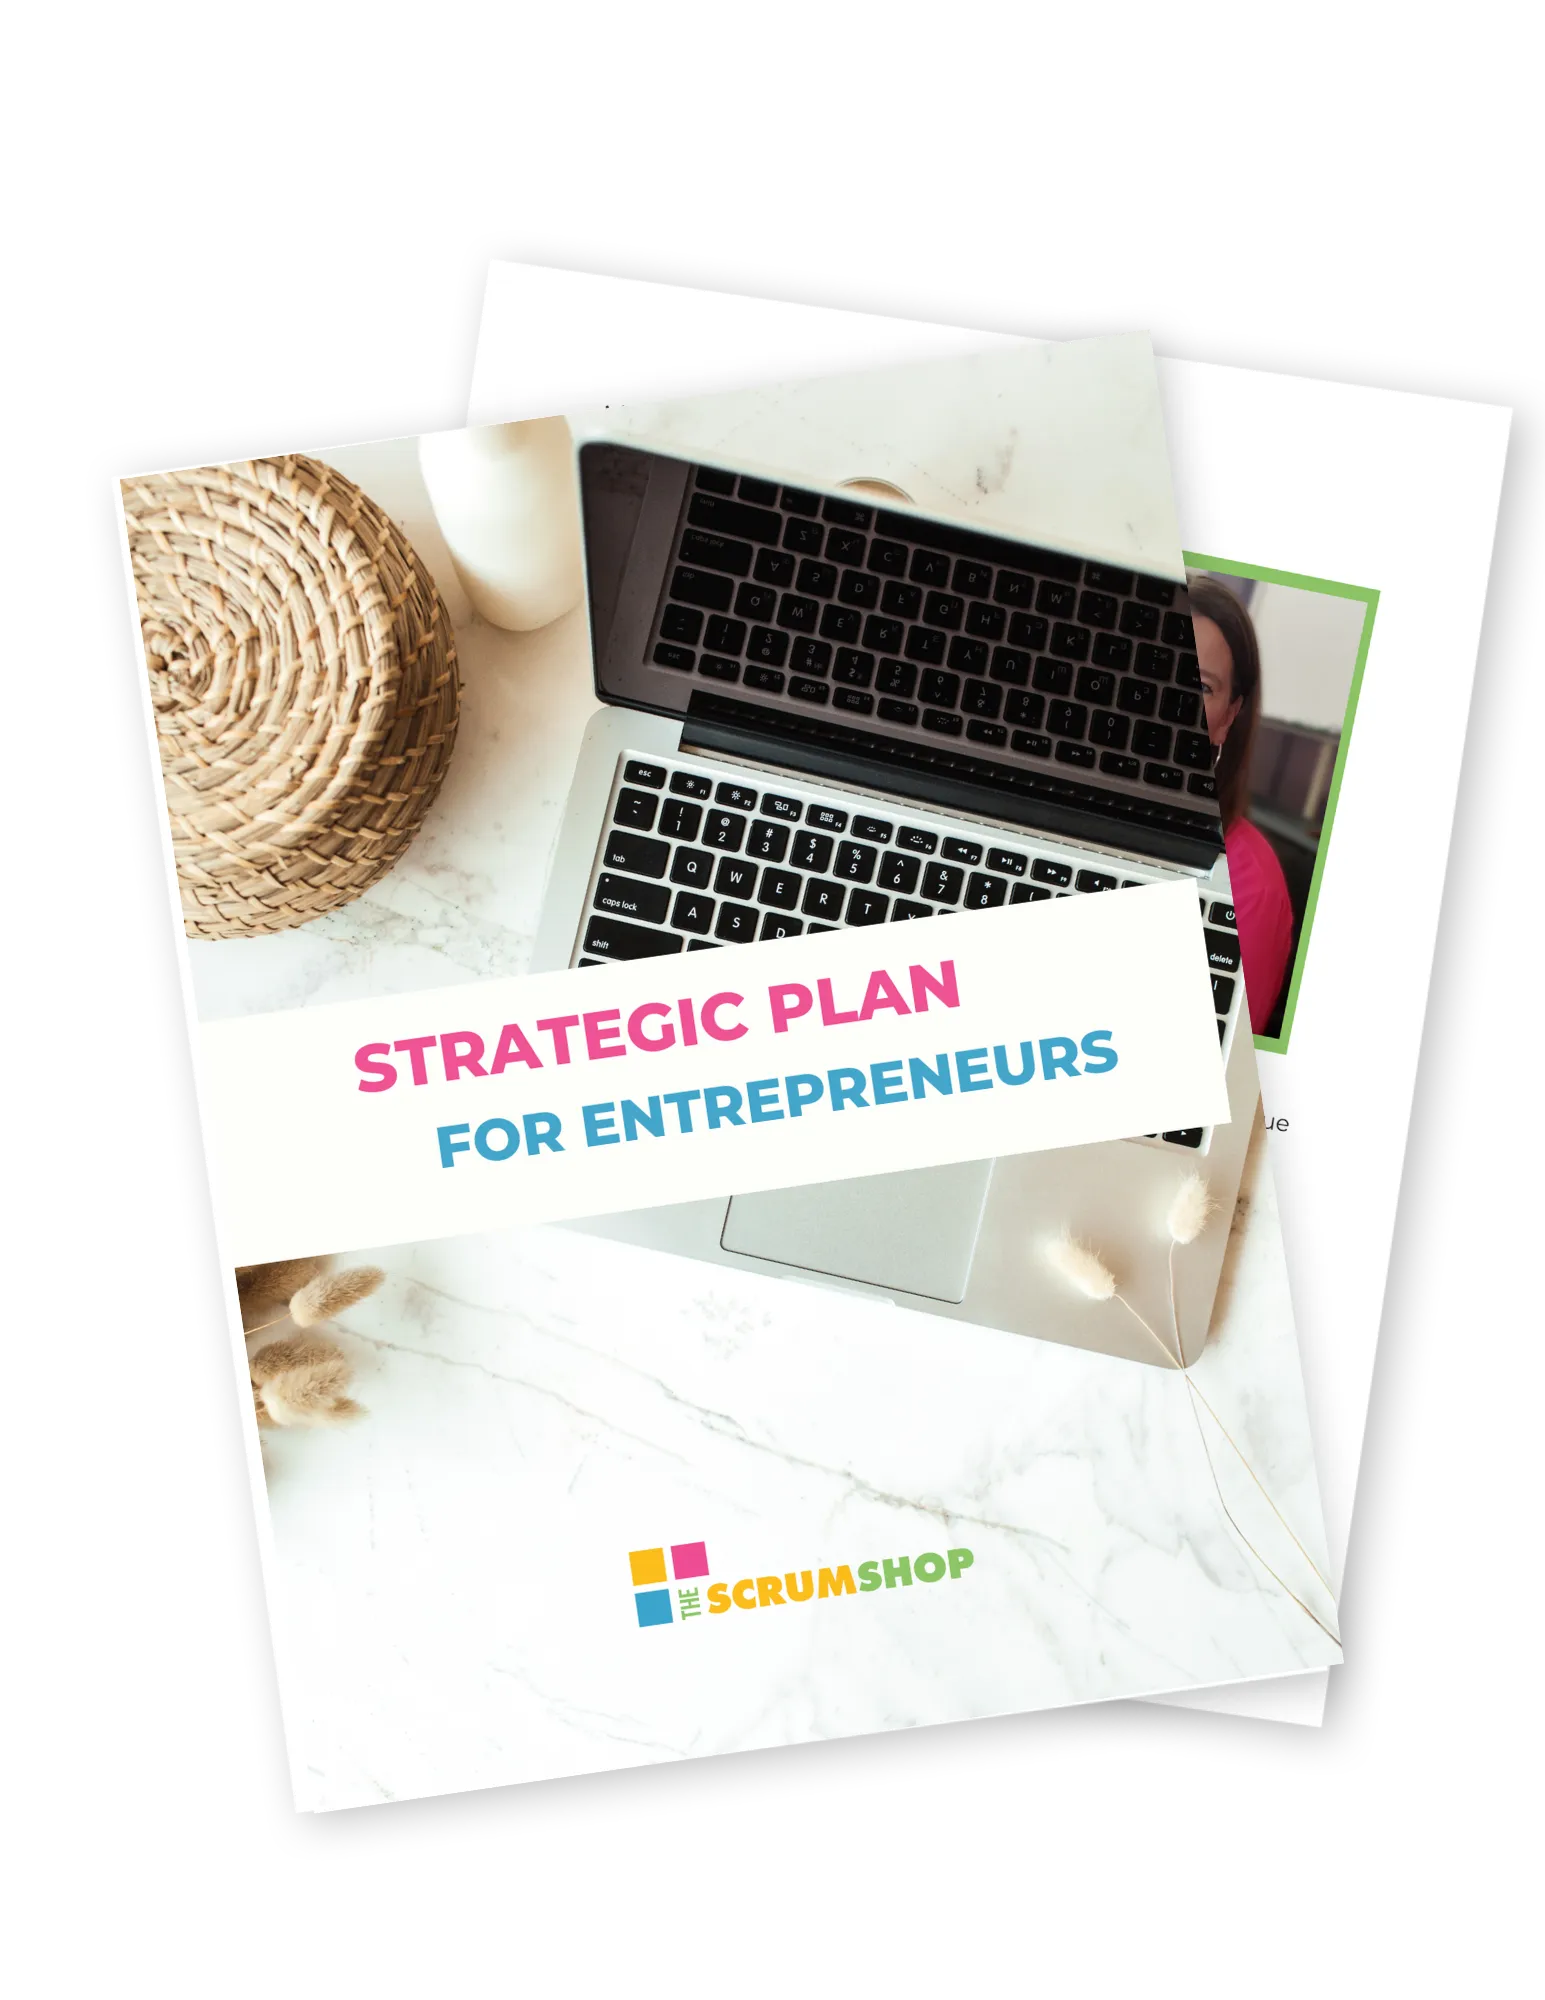 Strategic Plan or Entrpreneurs